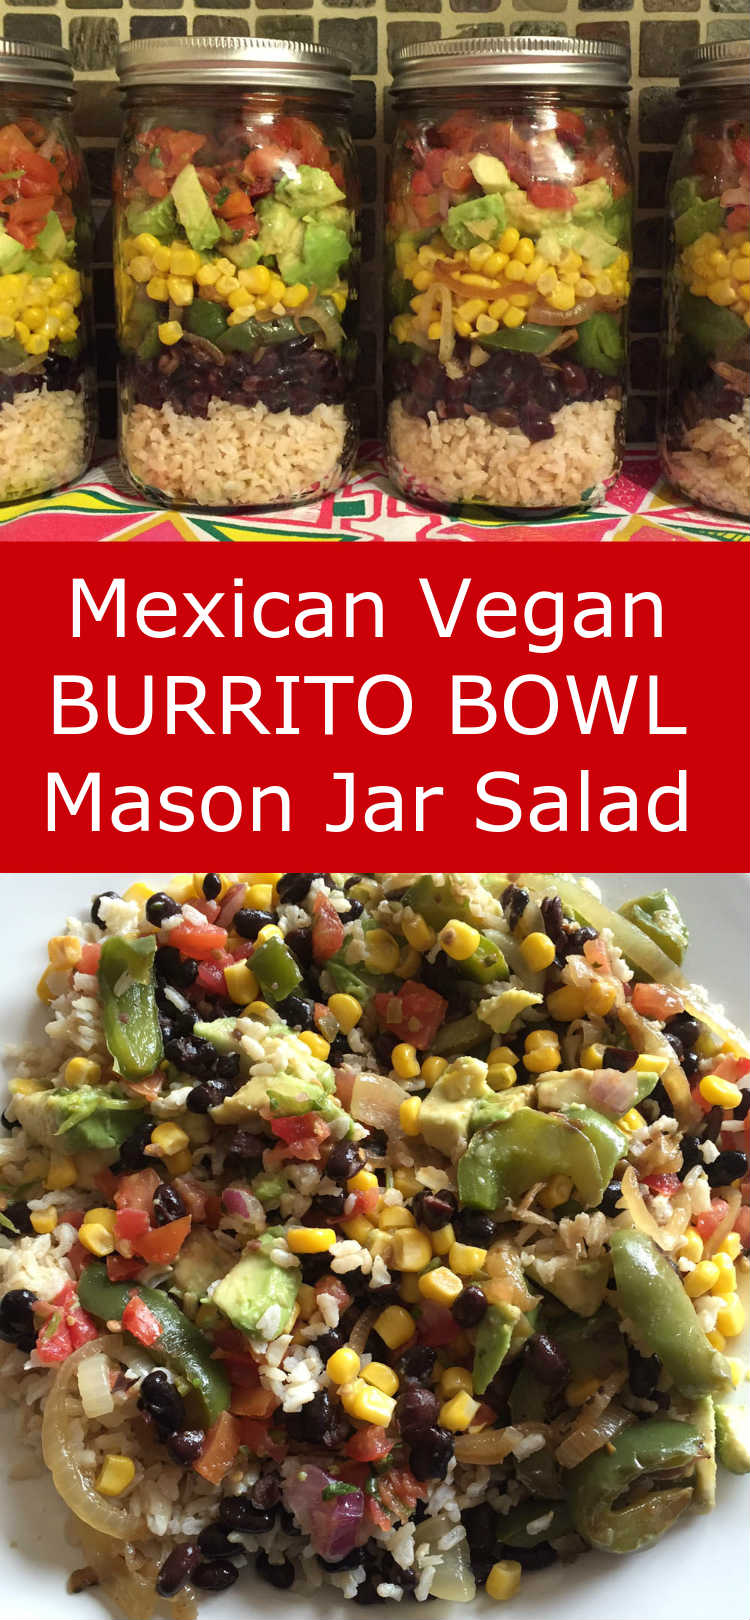 Mexican Vegan Burrito Bowl Mason Jar Salad (Chipotle-Style)! – Melanie ...